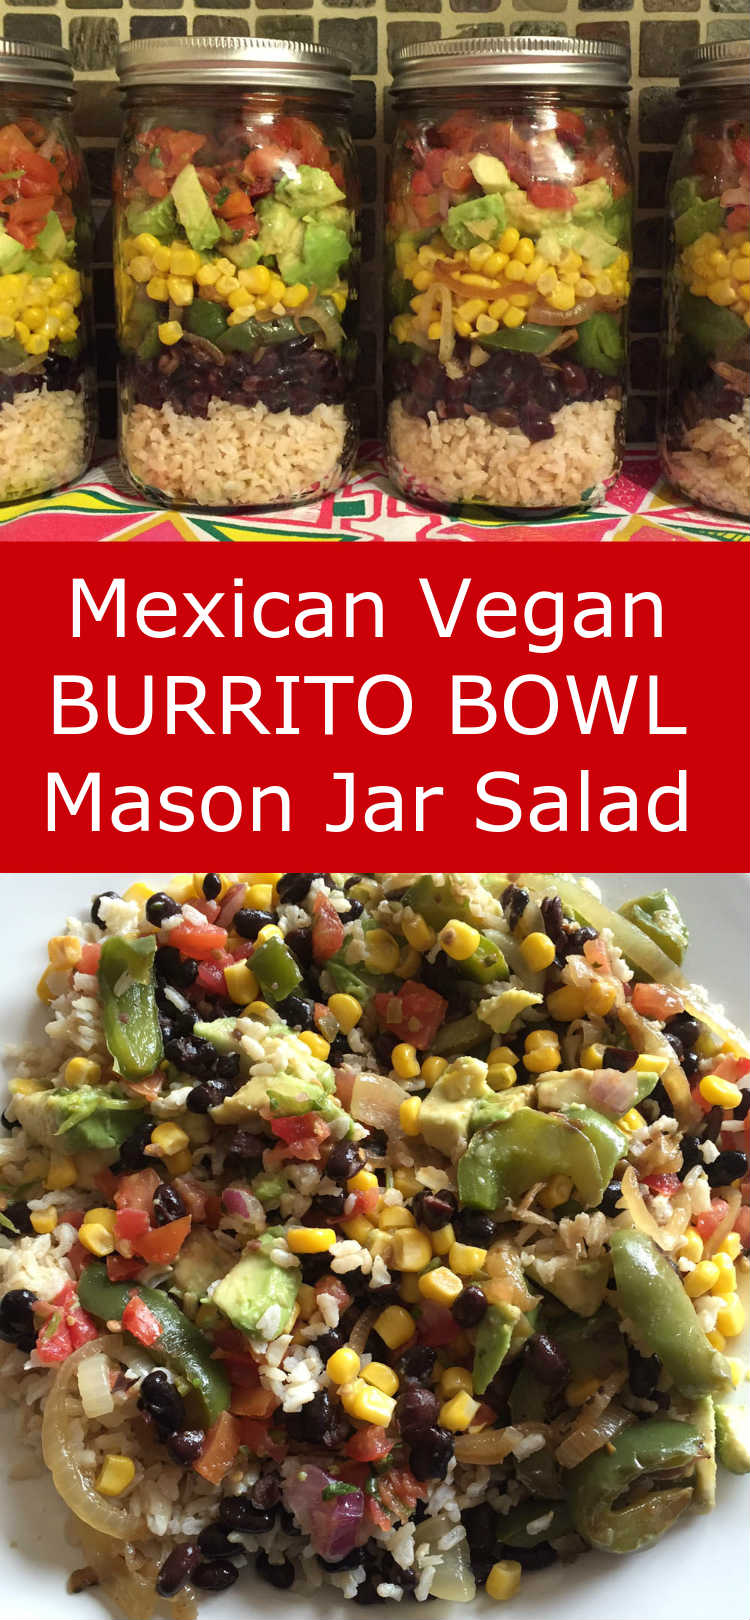 Mexican Vegan Burrito Bowl Mason Jar Salad (Chipotle-Style)! – Melanie ...